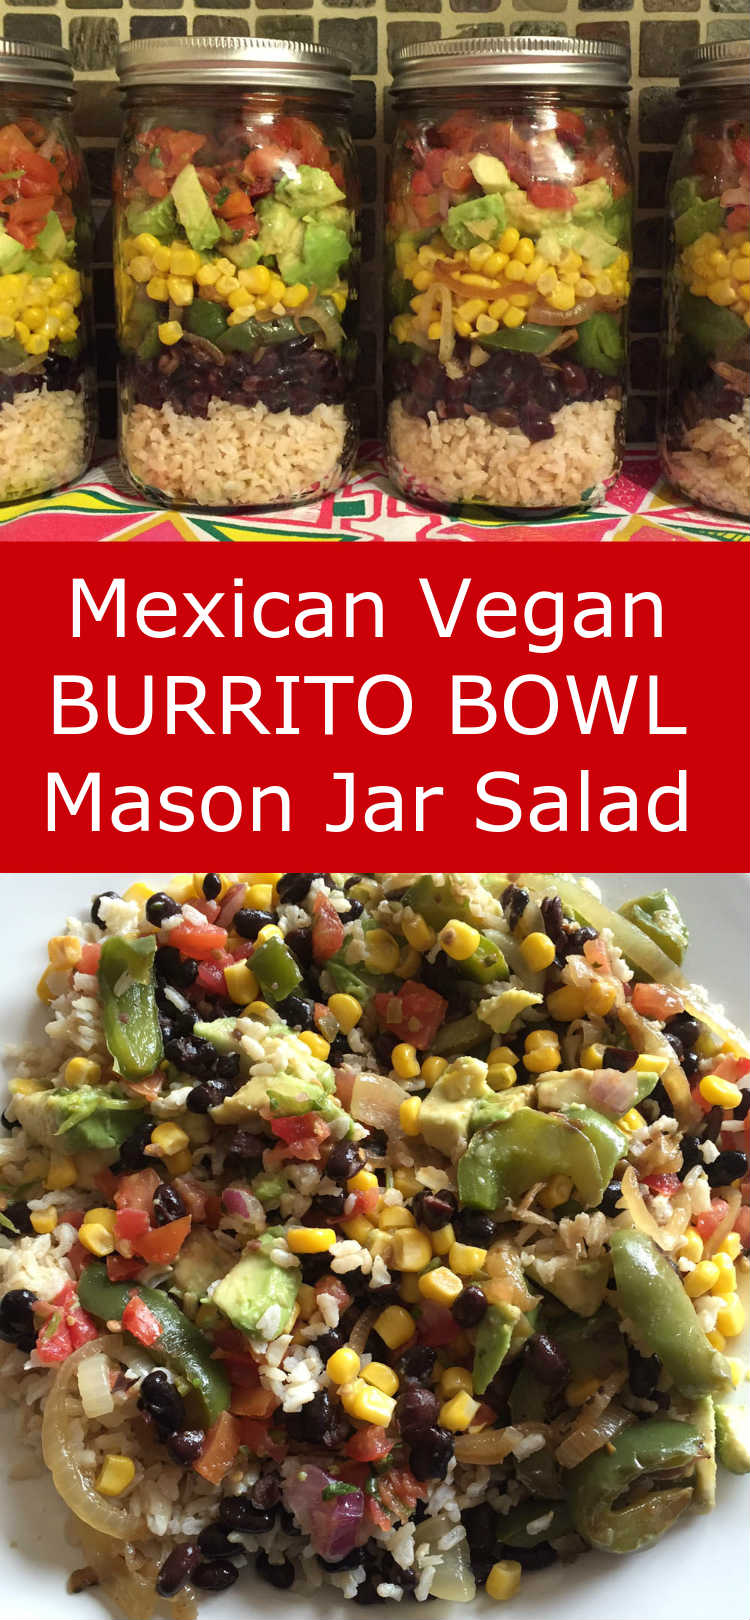 Mexican Vegan Burrito Bowl Mason Jar Salad (Chipotle-Style)! – Melanie ...